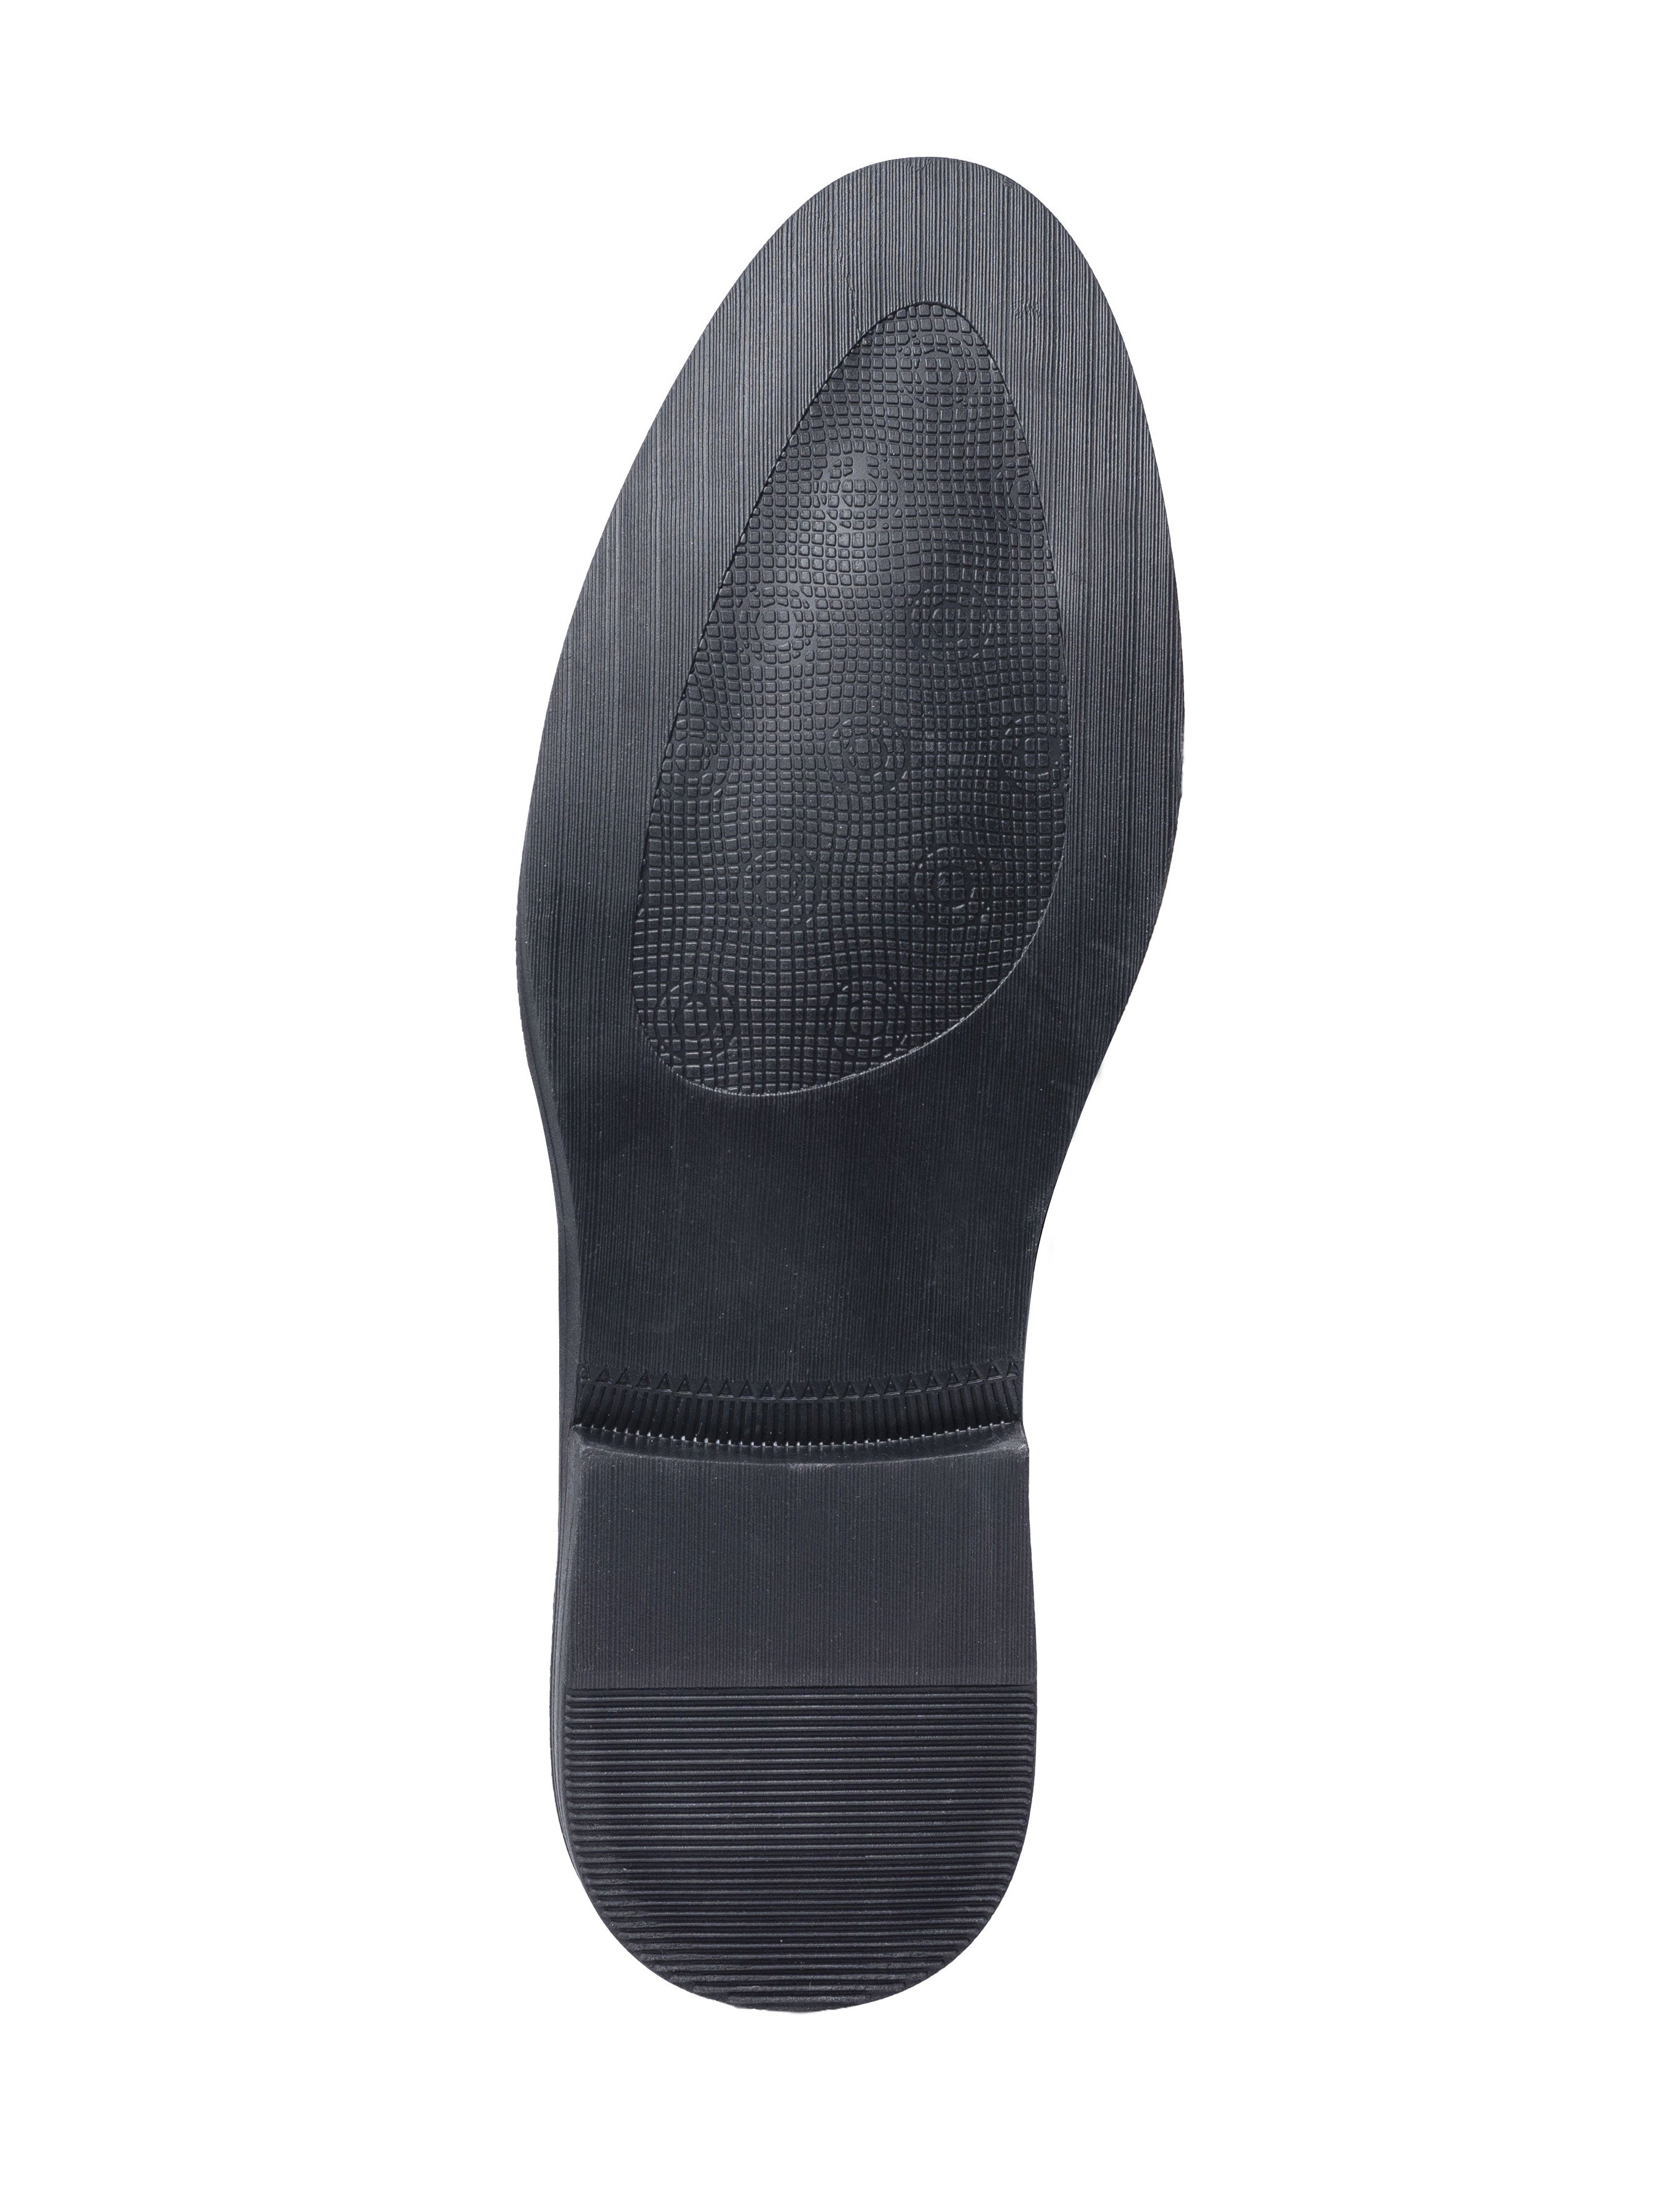 Horsebit Buckle Loafer - Solid Black Leather (Flexi-Sole) - Zeve Shoes